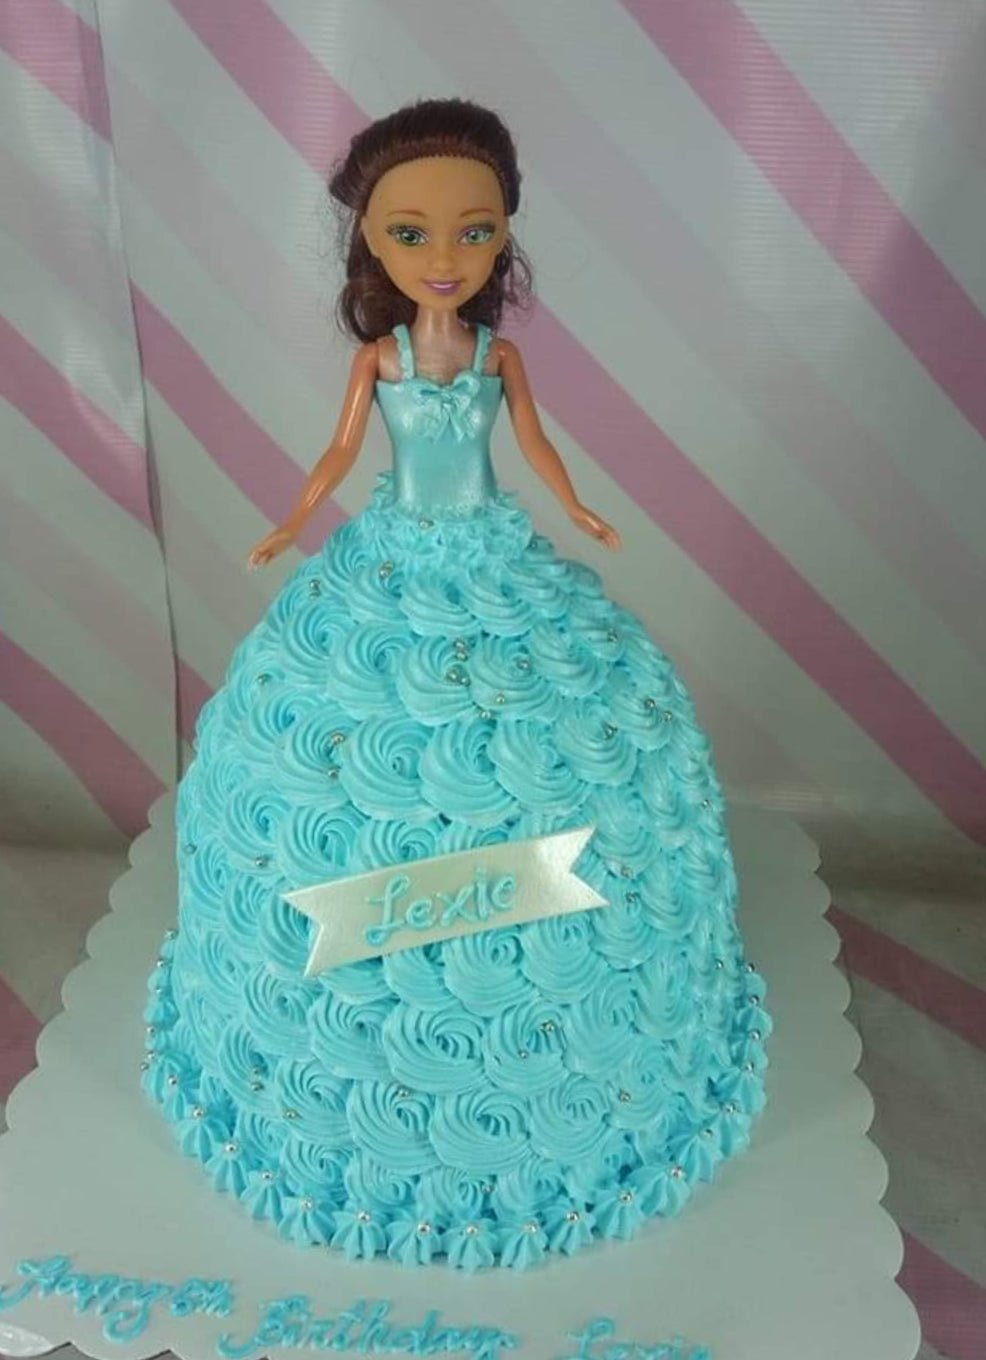 Barbie Doll Cakes - Emily's CakesEmily's Cakes